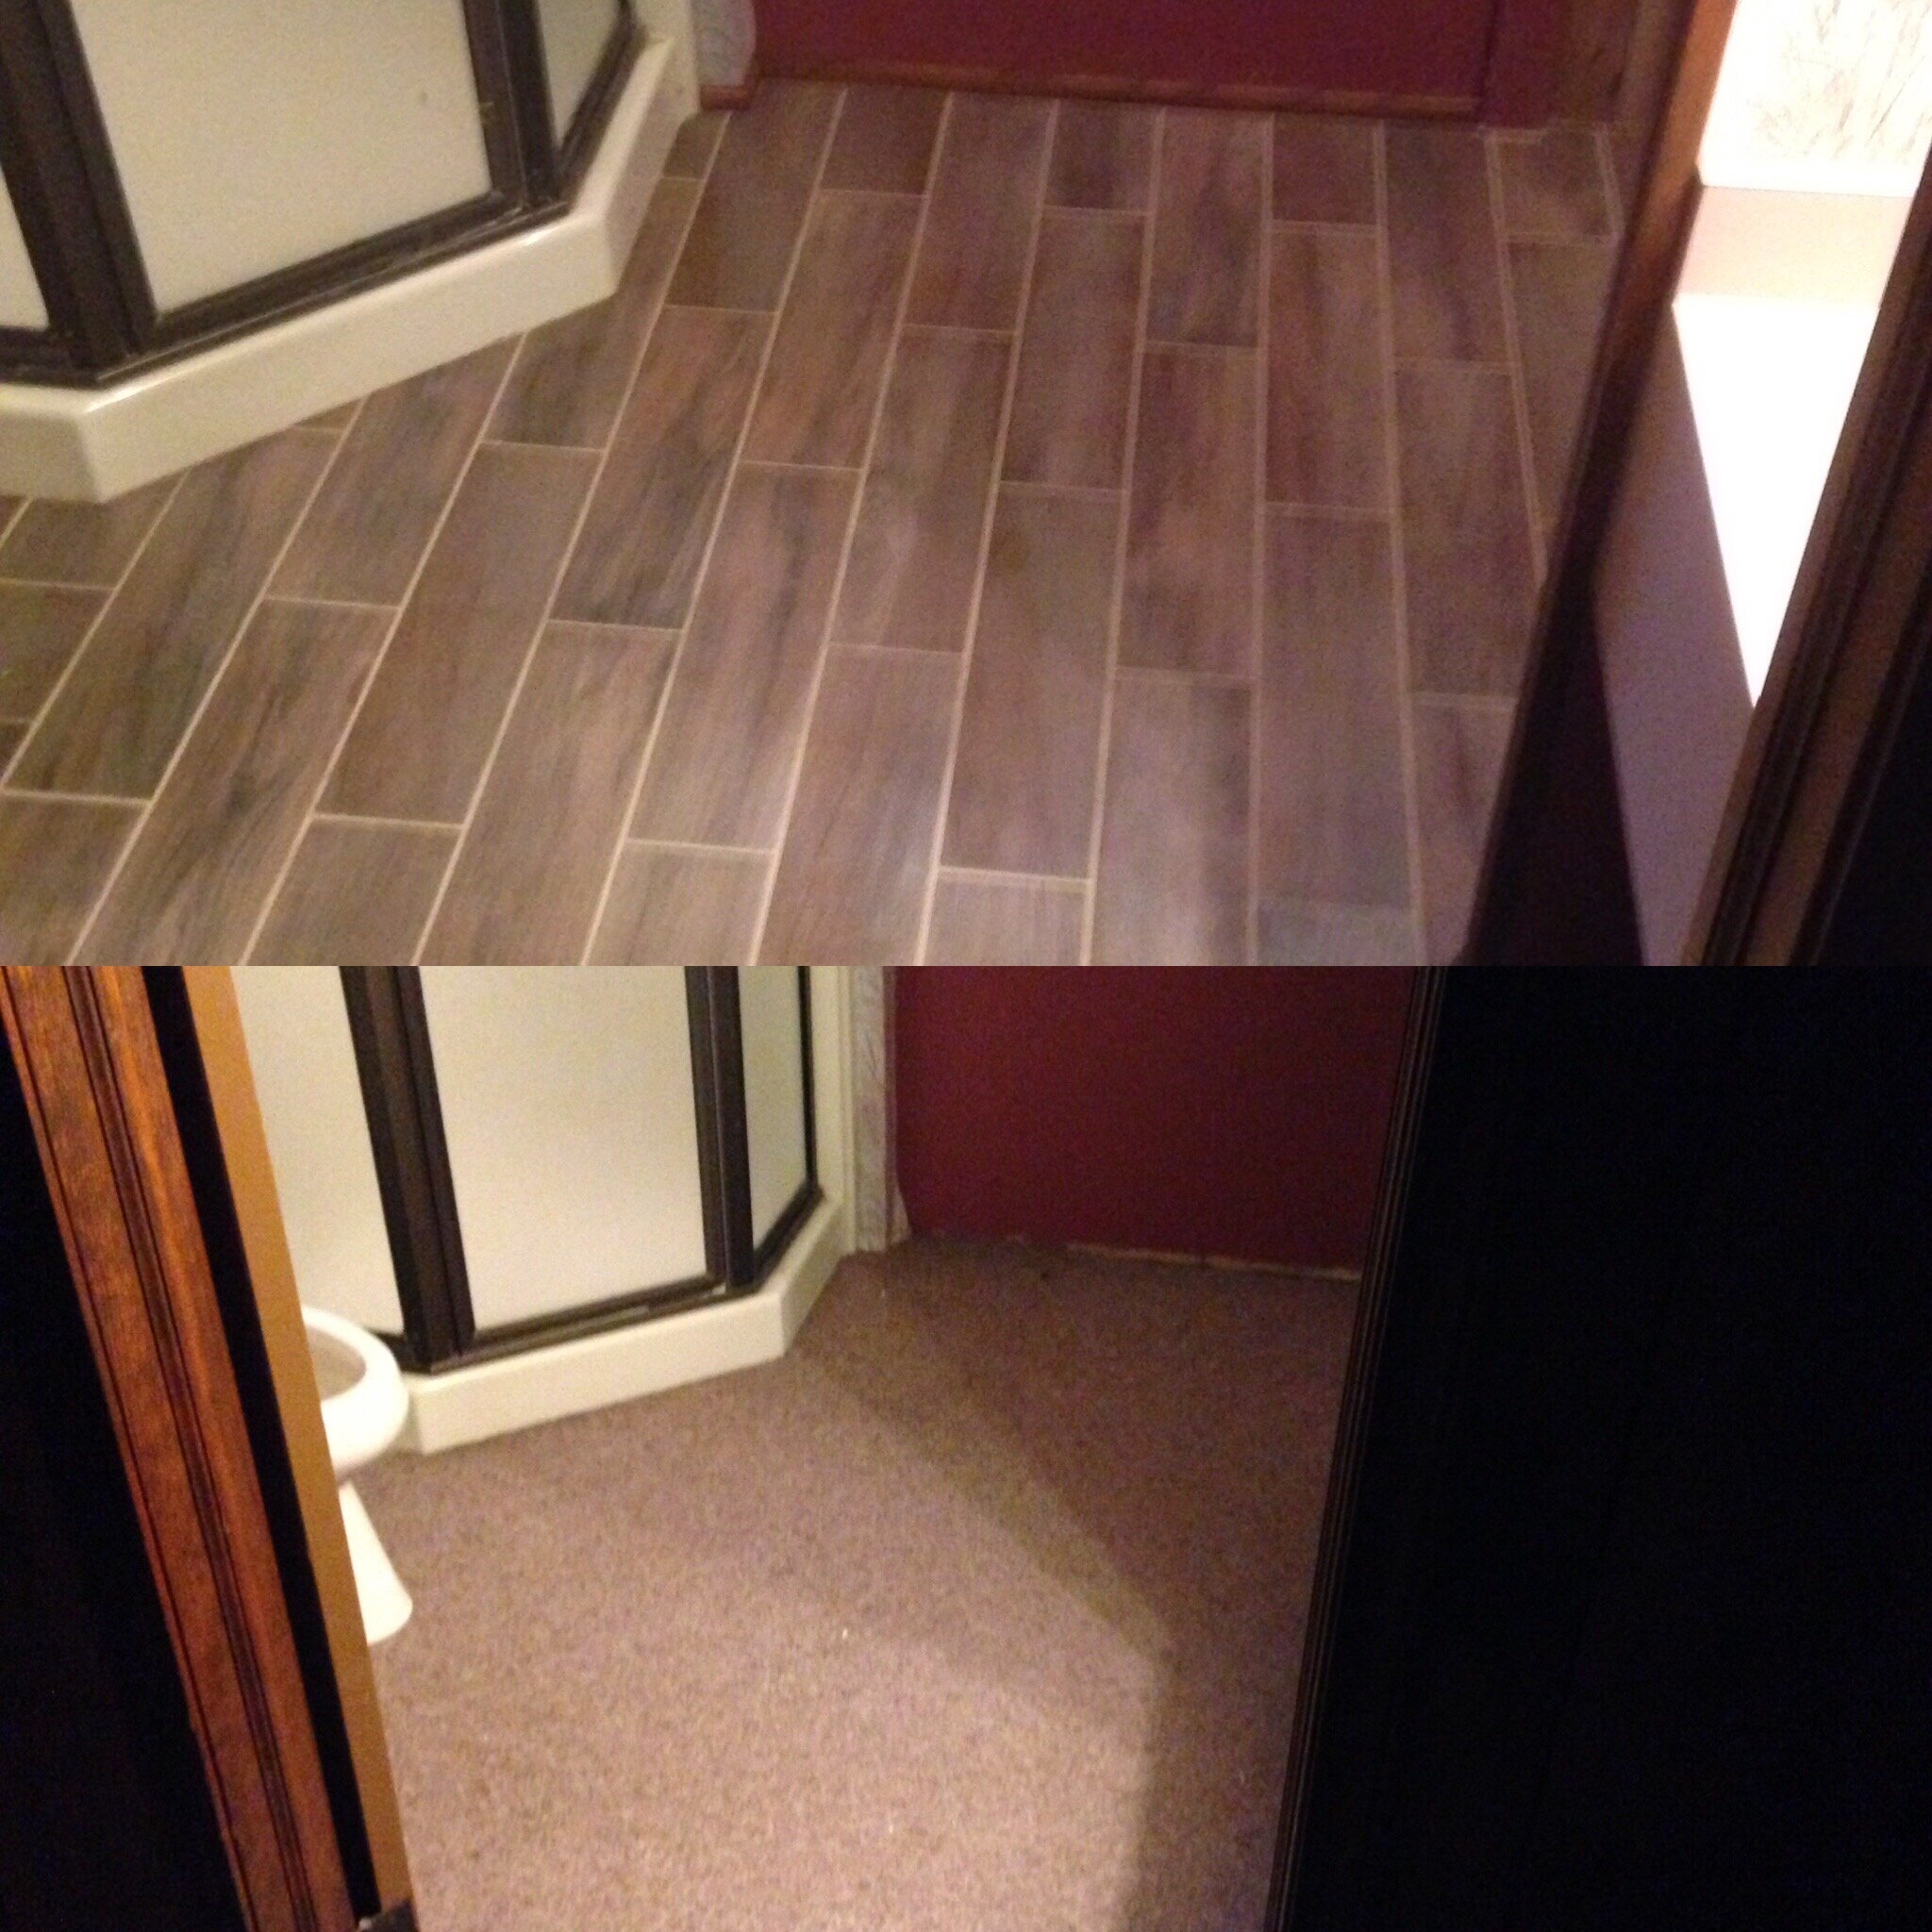  Simple flooring change in a basement bathroom, carpet in a bathroom?! Bad idea, how about some porcelain wood grain tile. 